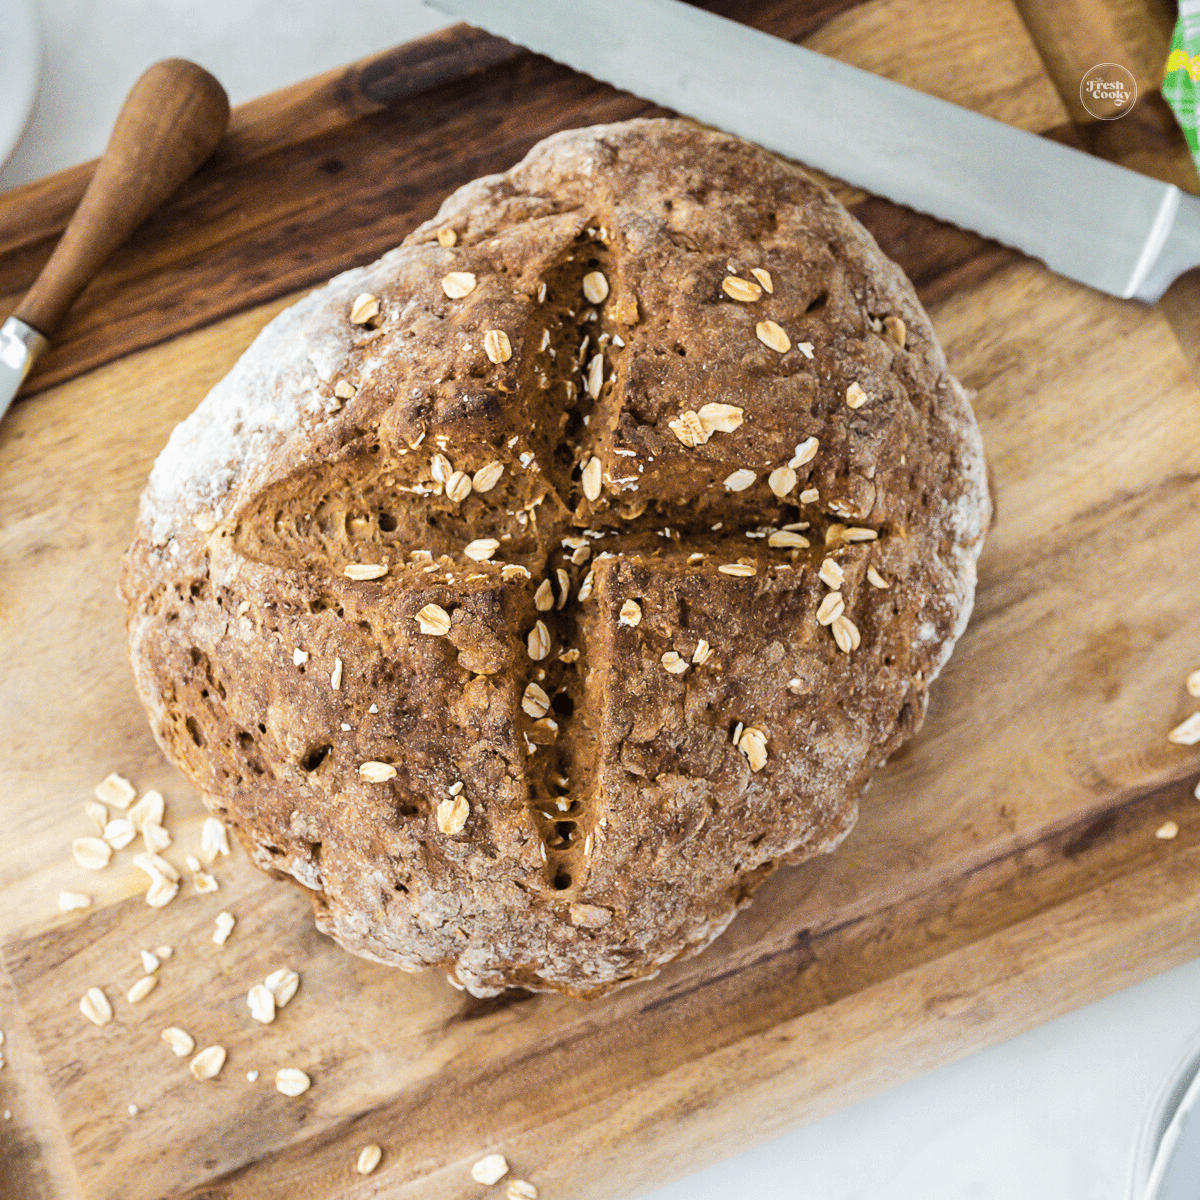 Irish brown bread on cutting board with serrated knife.